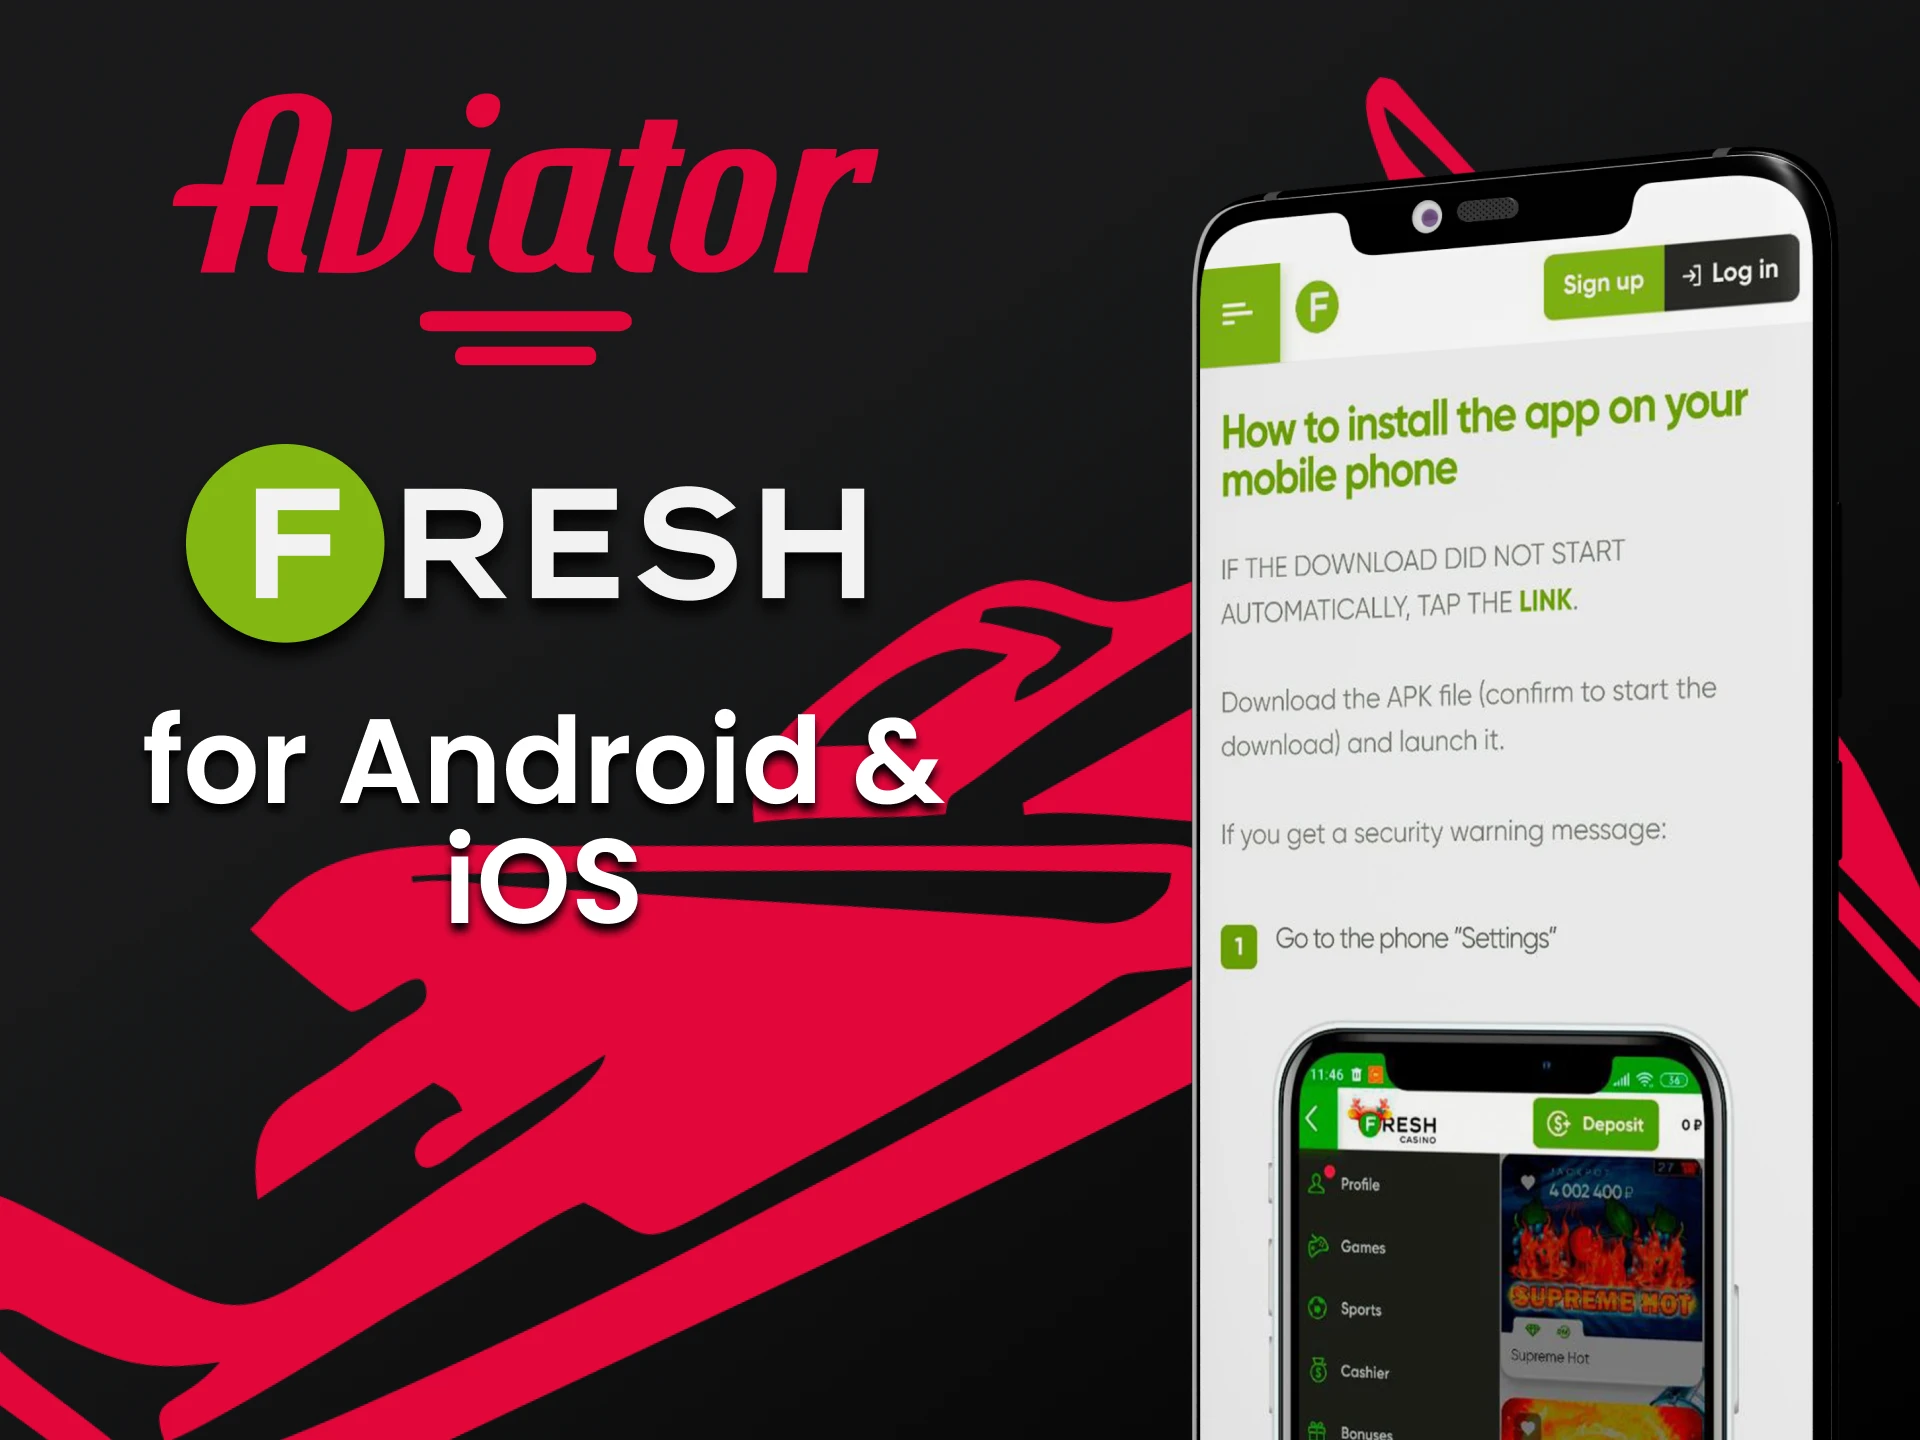 Play Aviator through the Fresh Casino app.